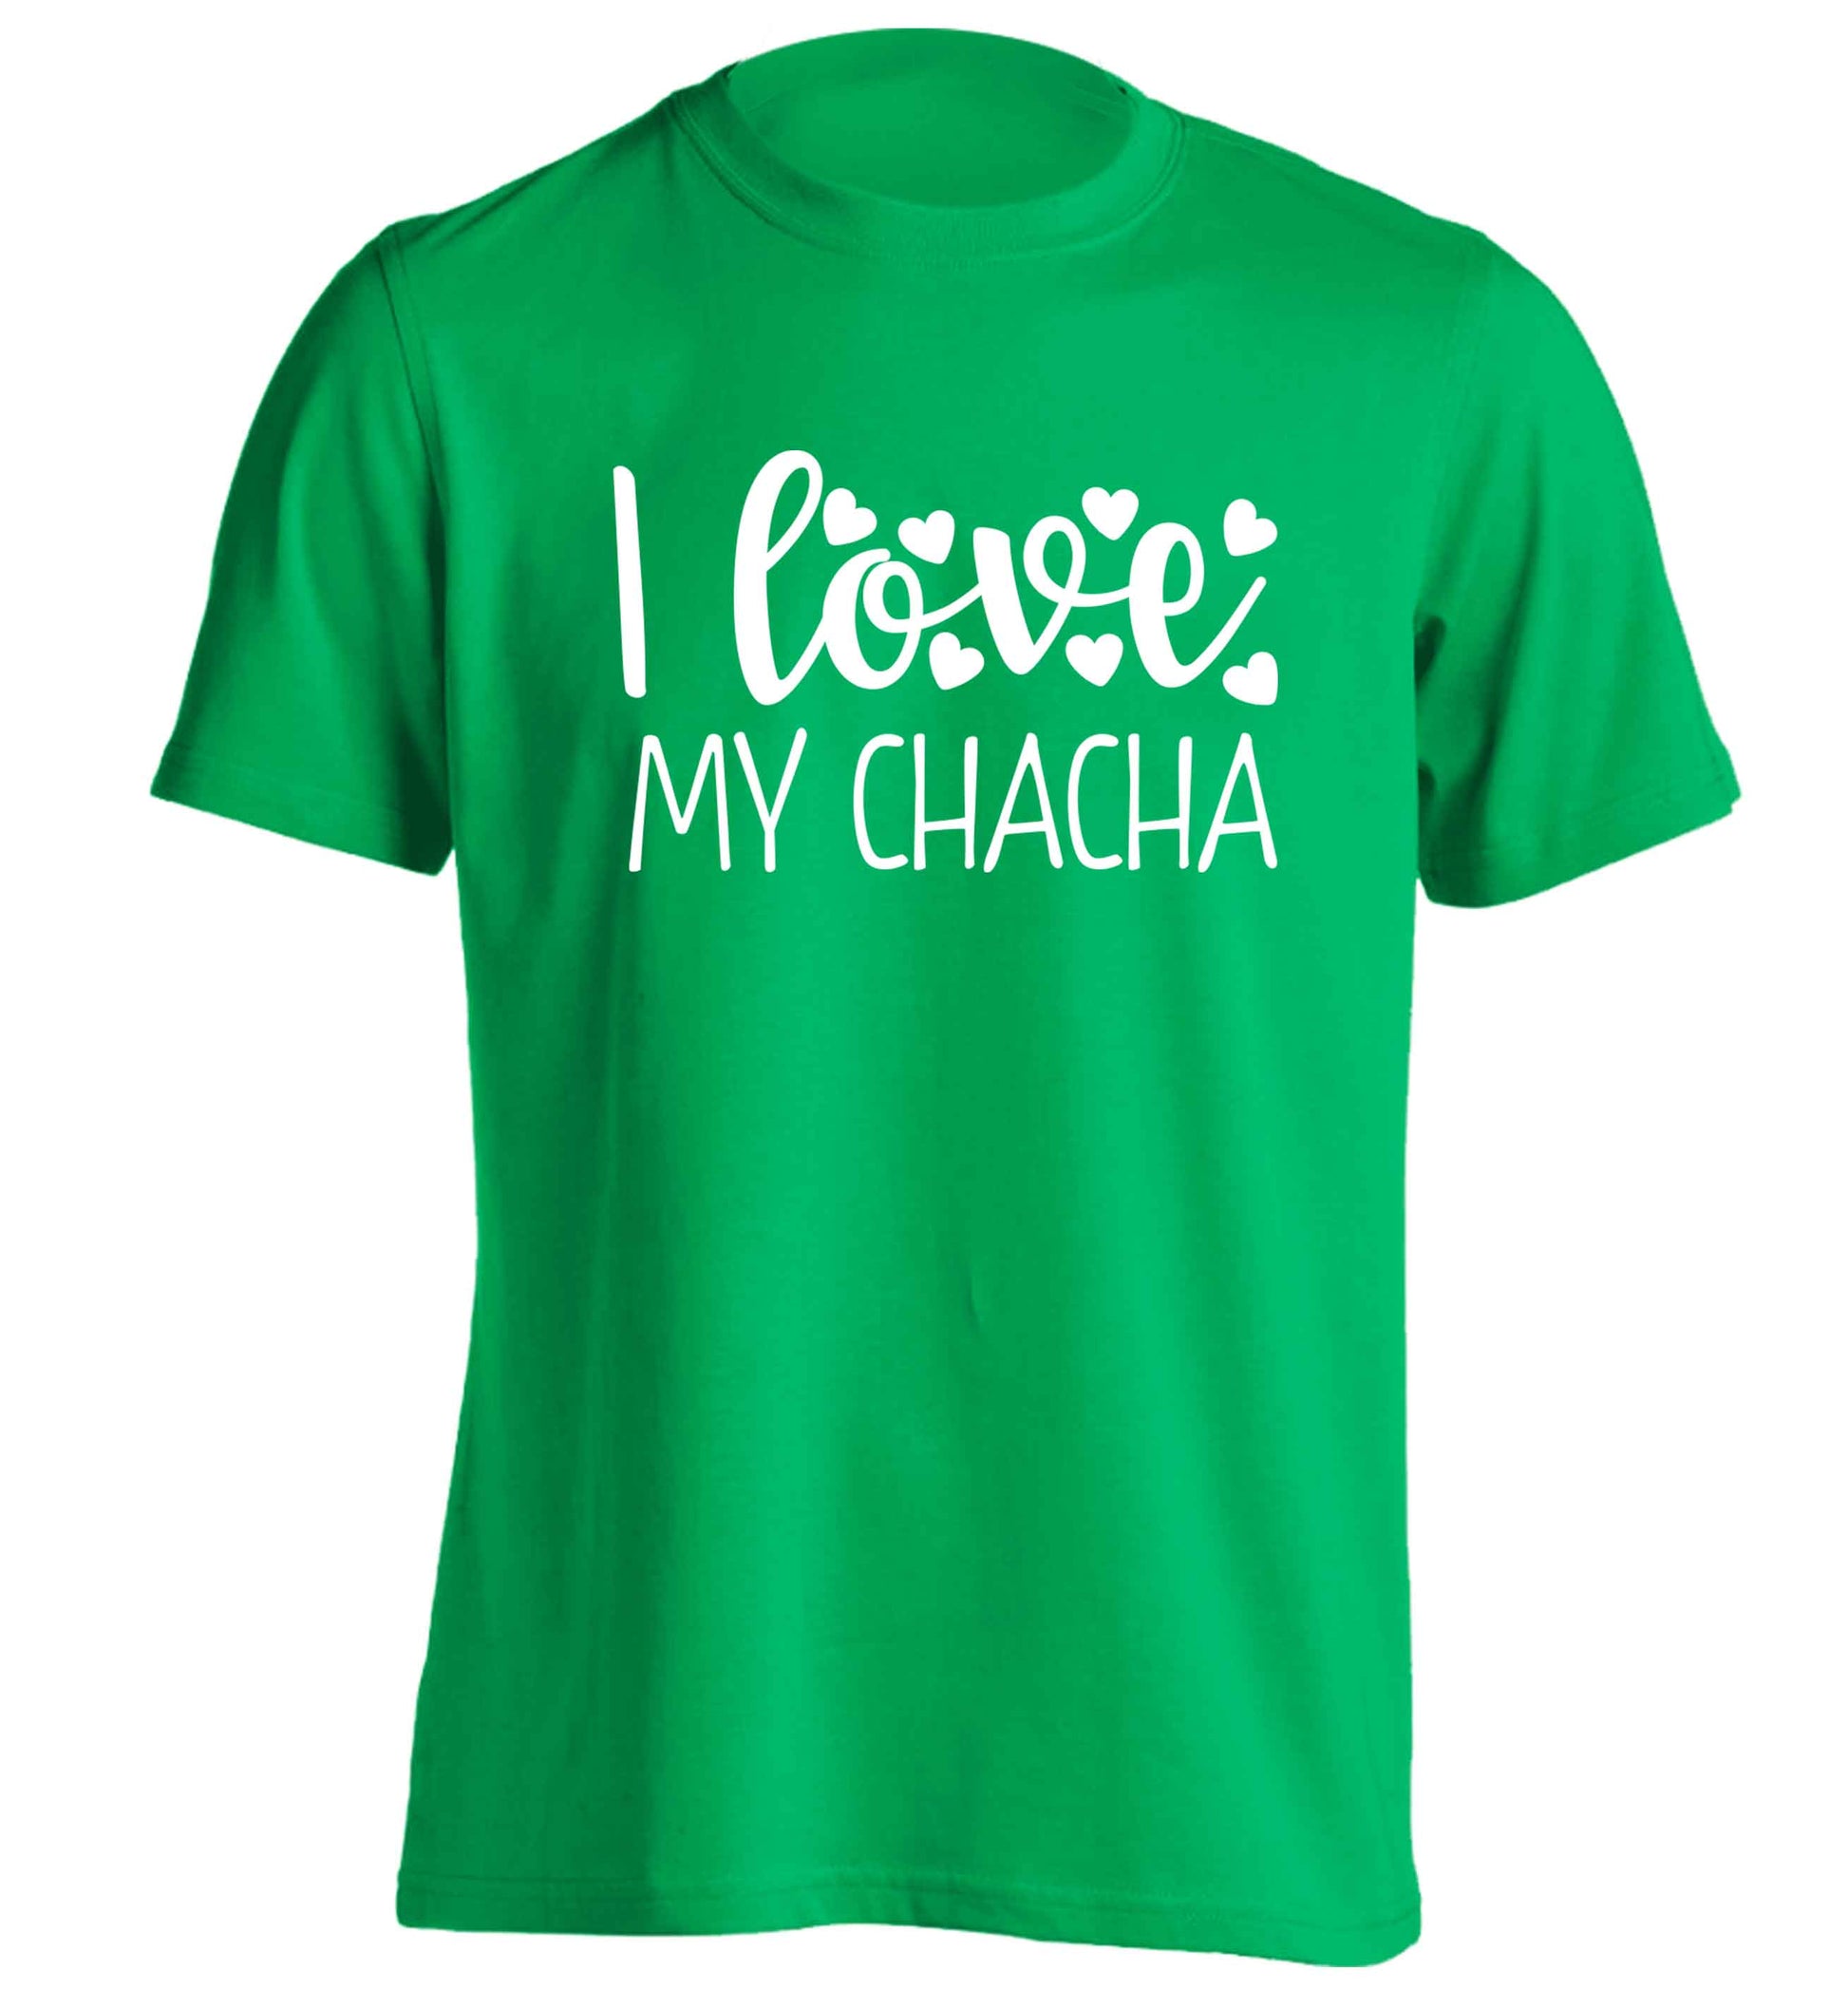 I love my chacha adults unisex green Tshirt 2XL